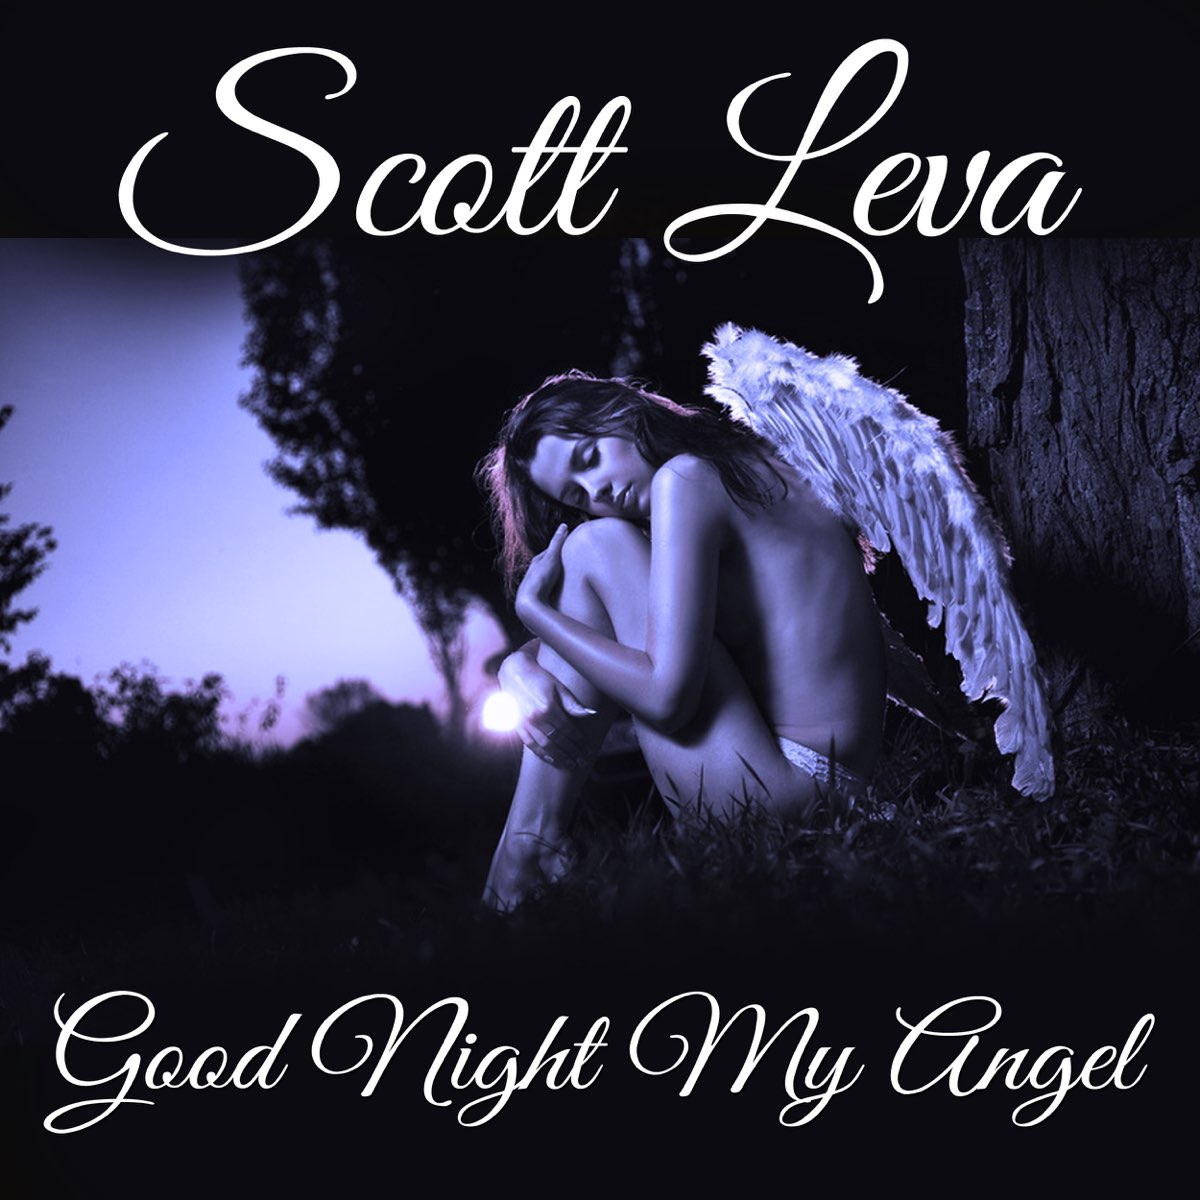 Good Night My Angel - Single by Scott Leva on Apple Music